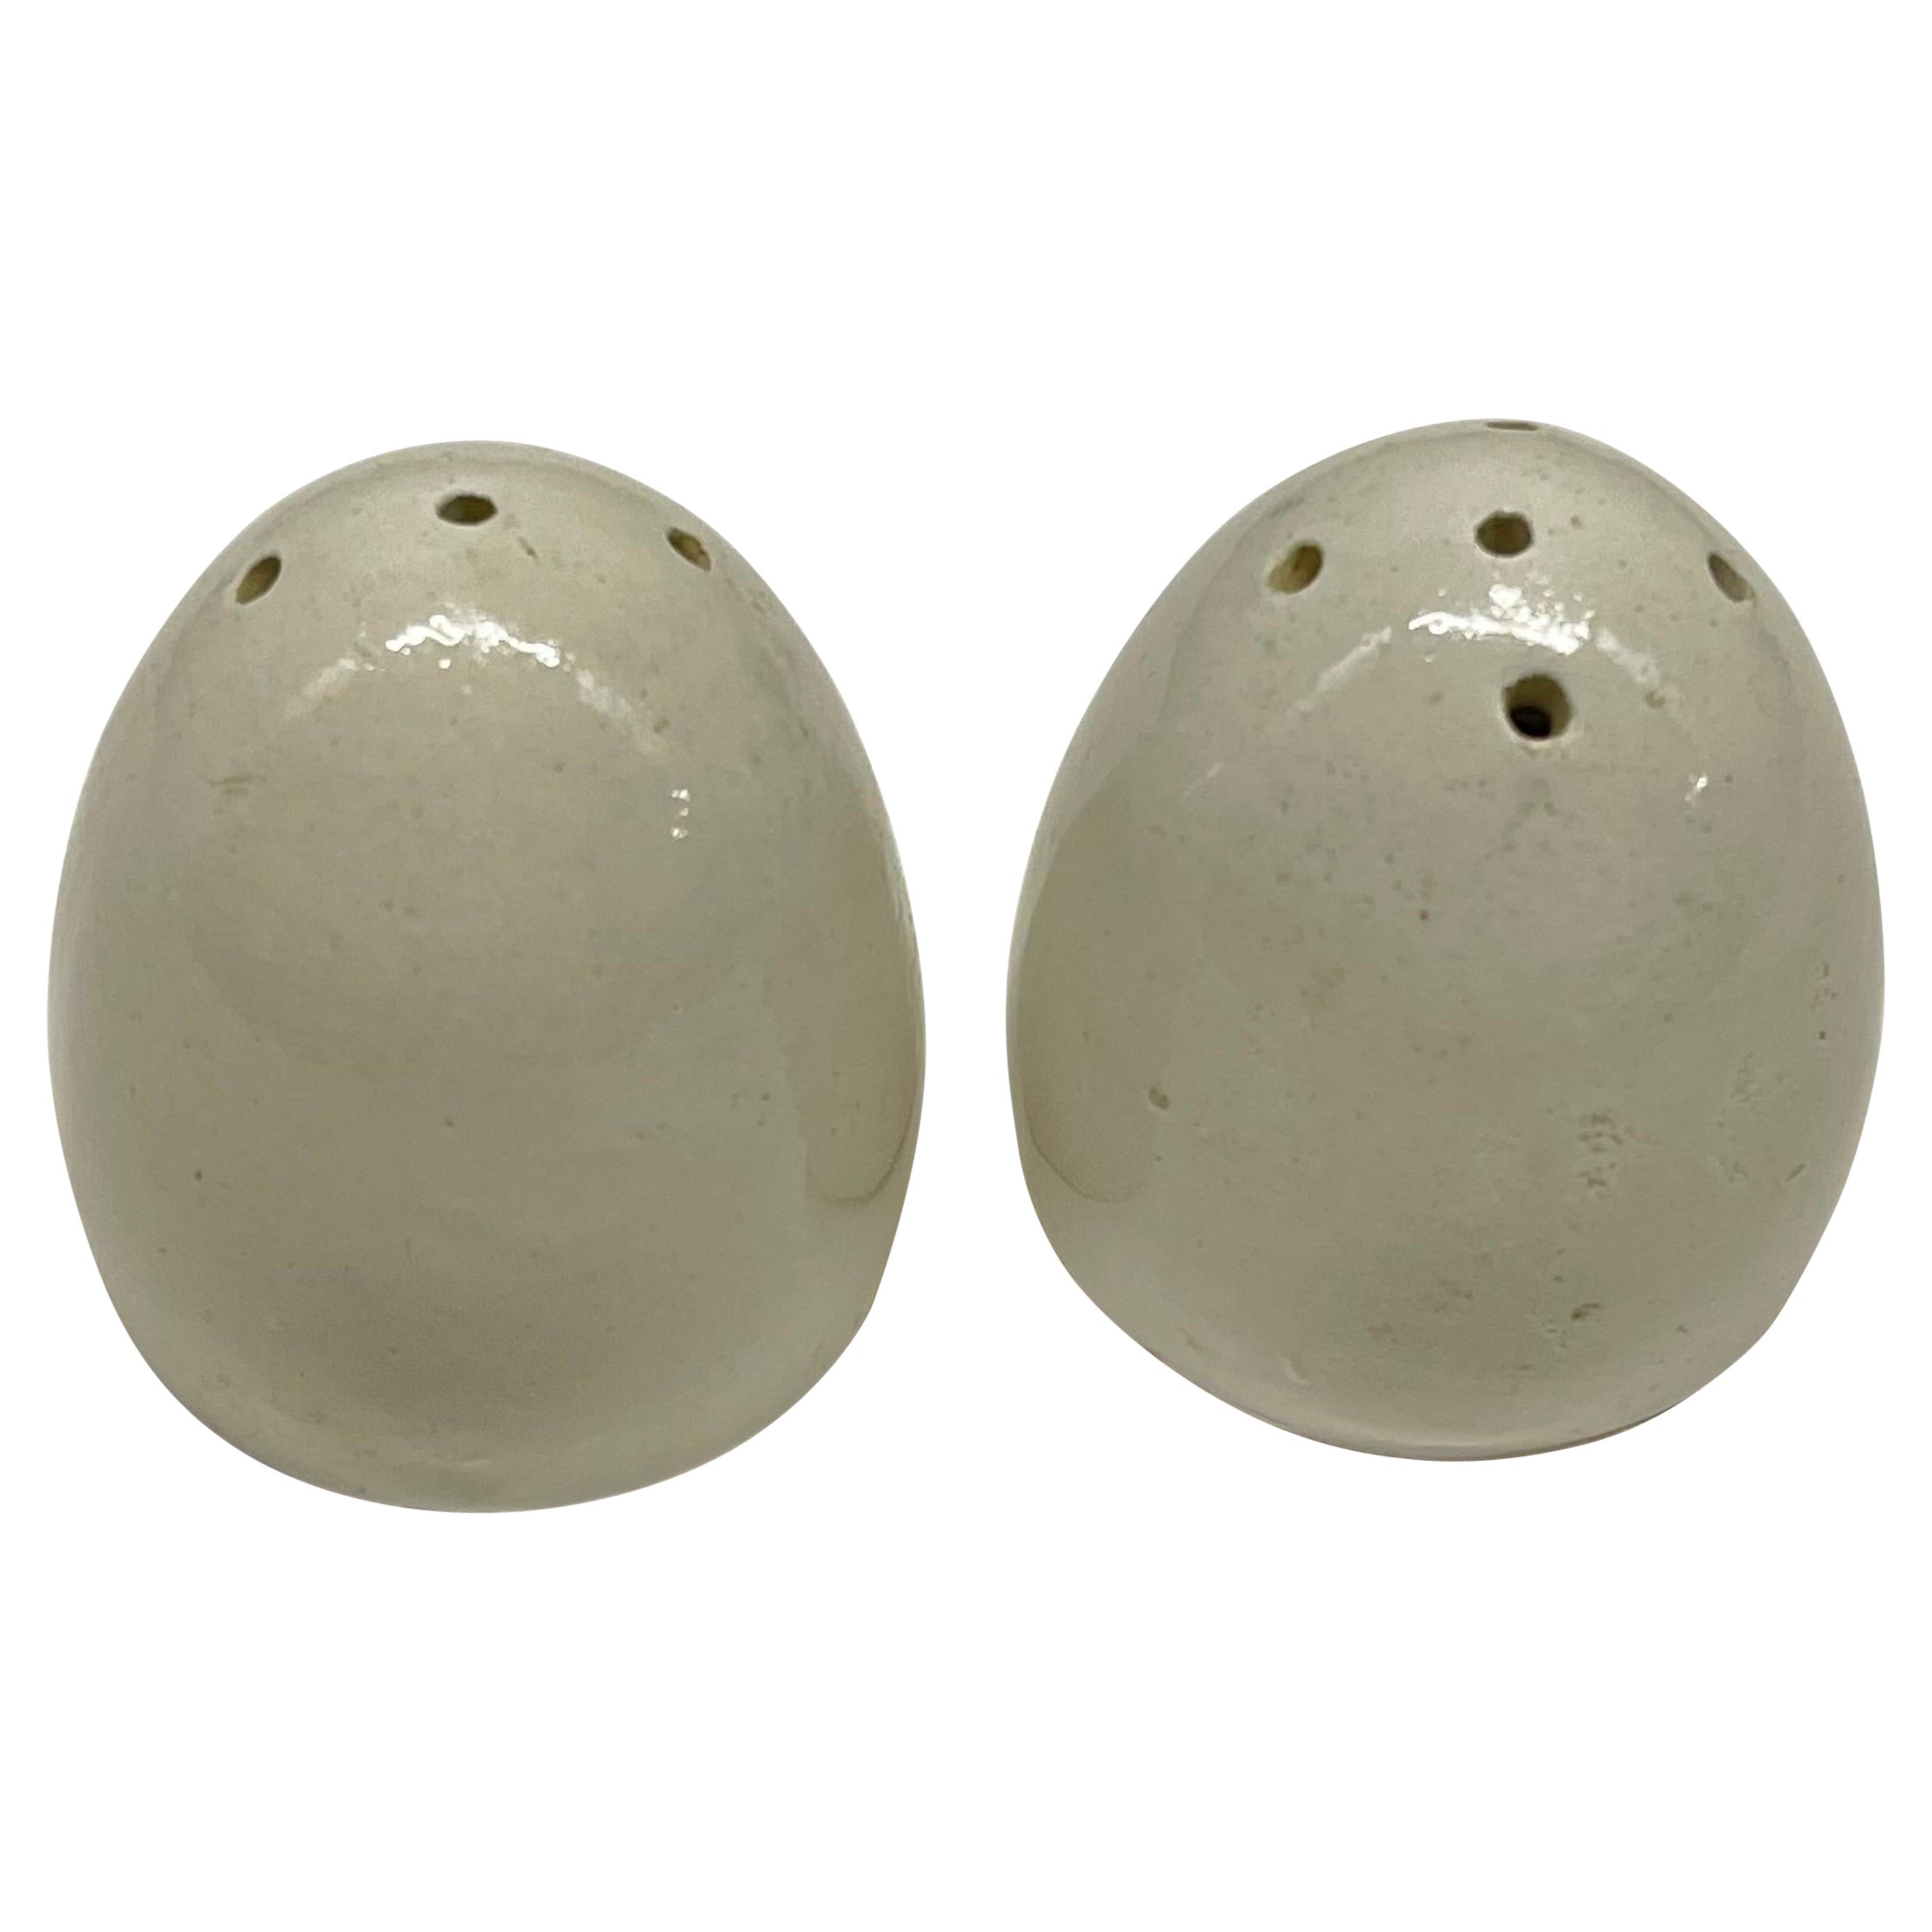 Pair of Midcentury Italian White Ceramic "Uovo" Salt and Pepper Shakers, 1960s